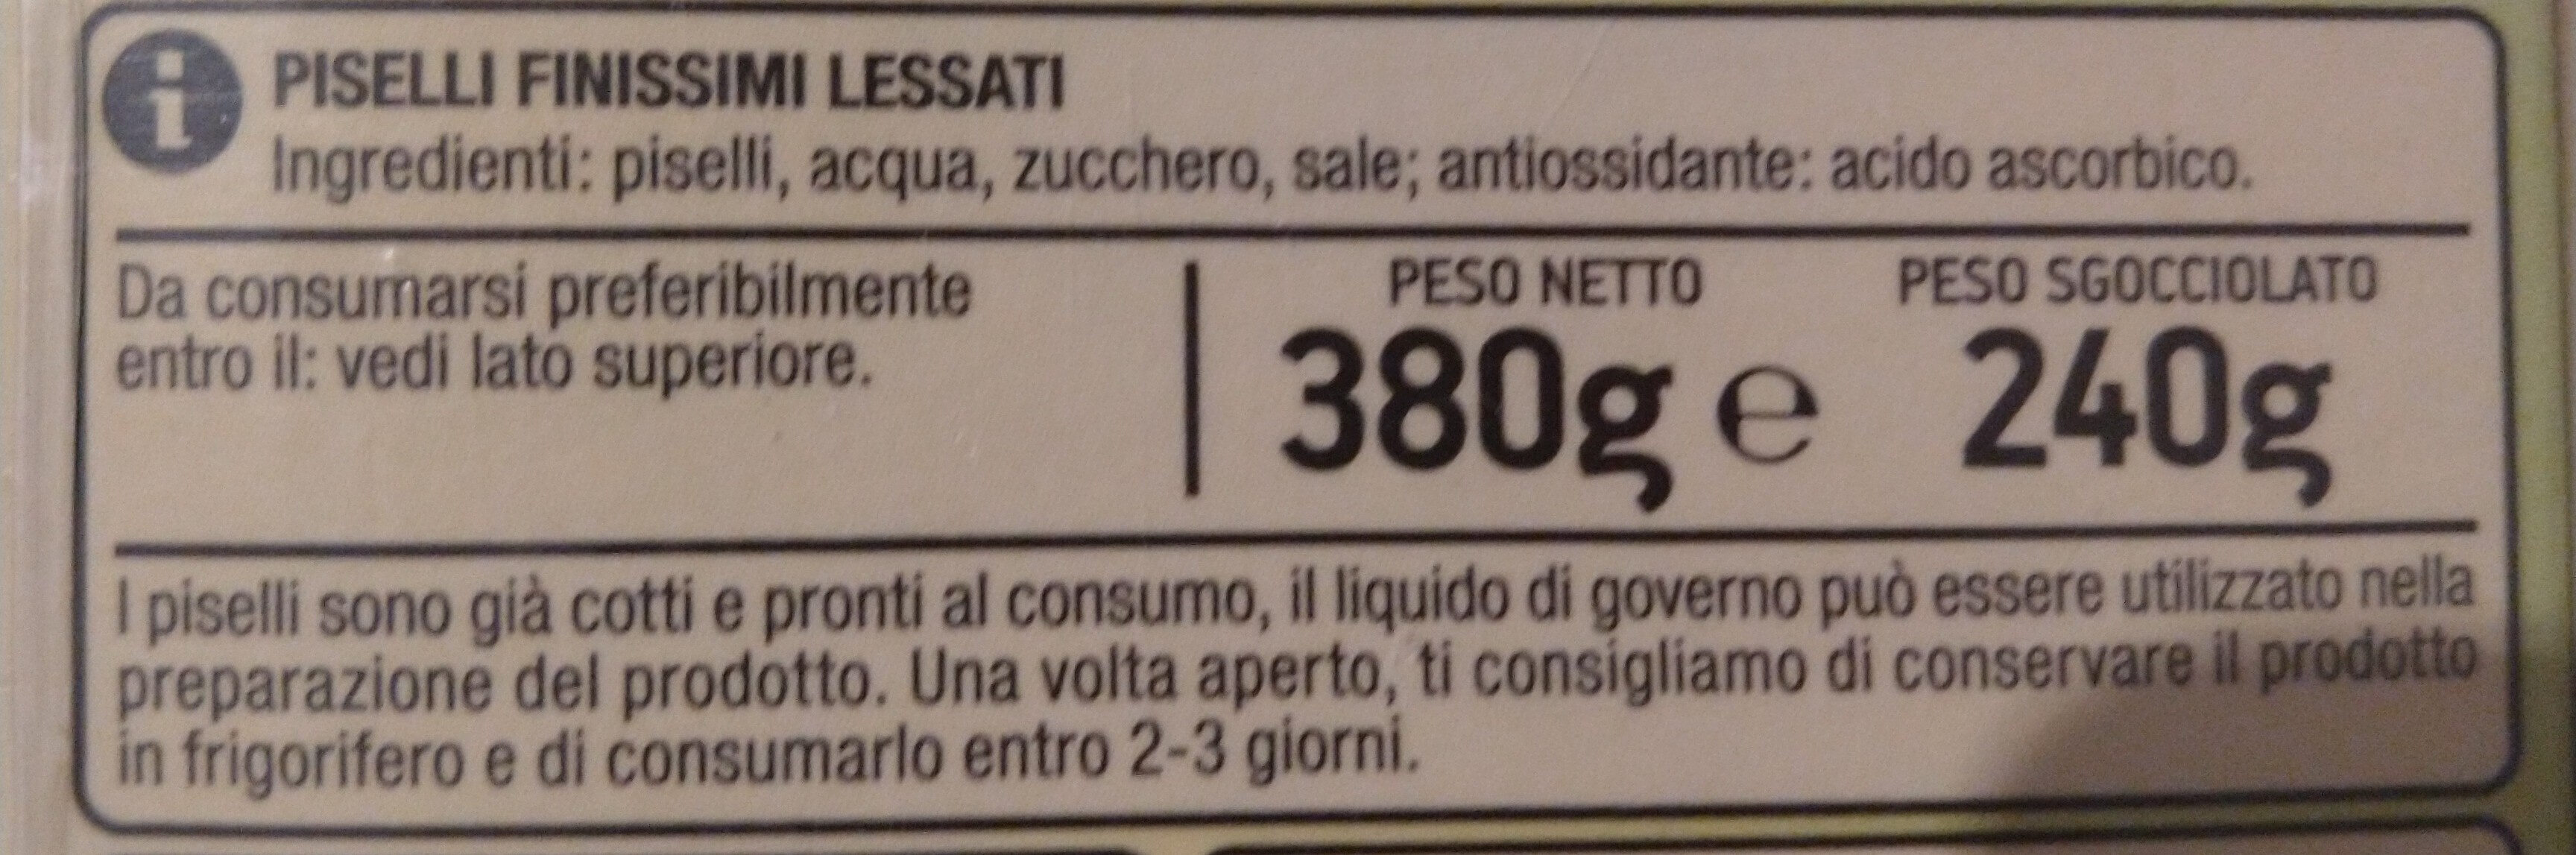 Piselli - Ingredienti